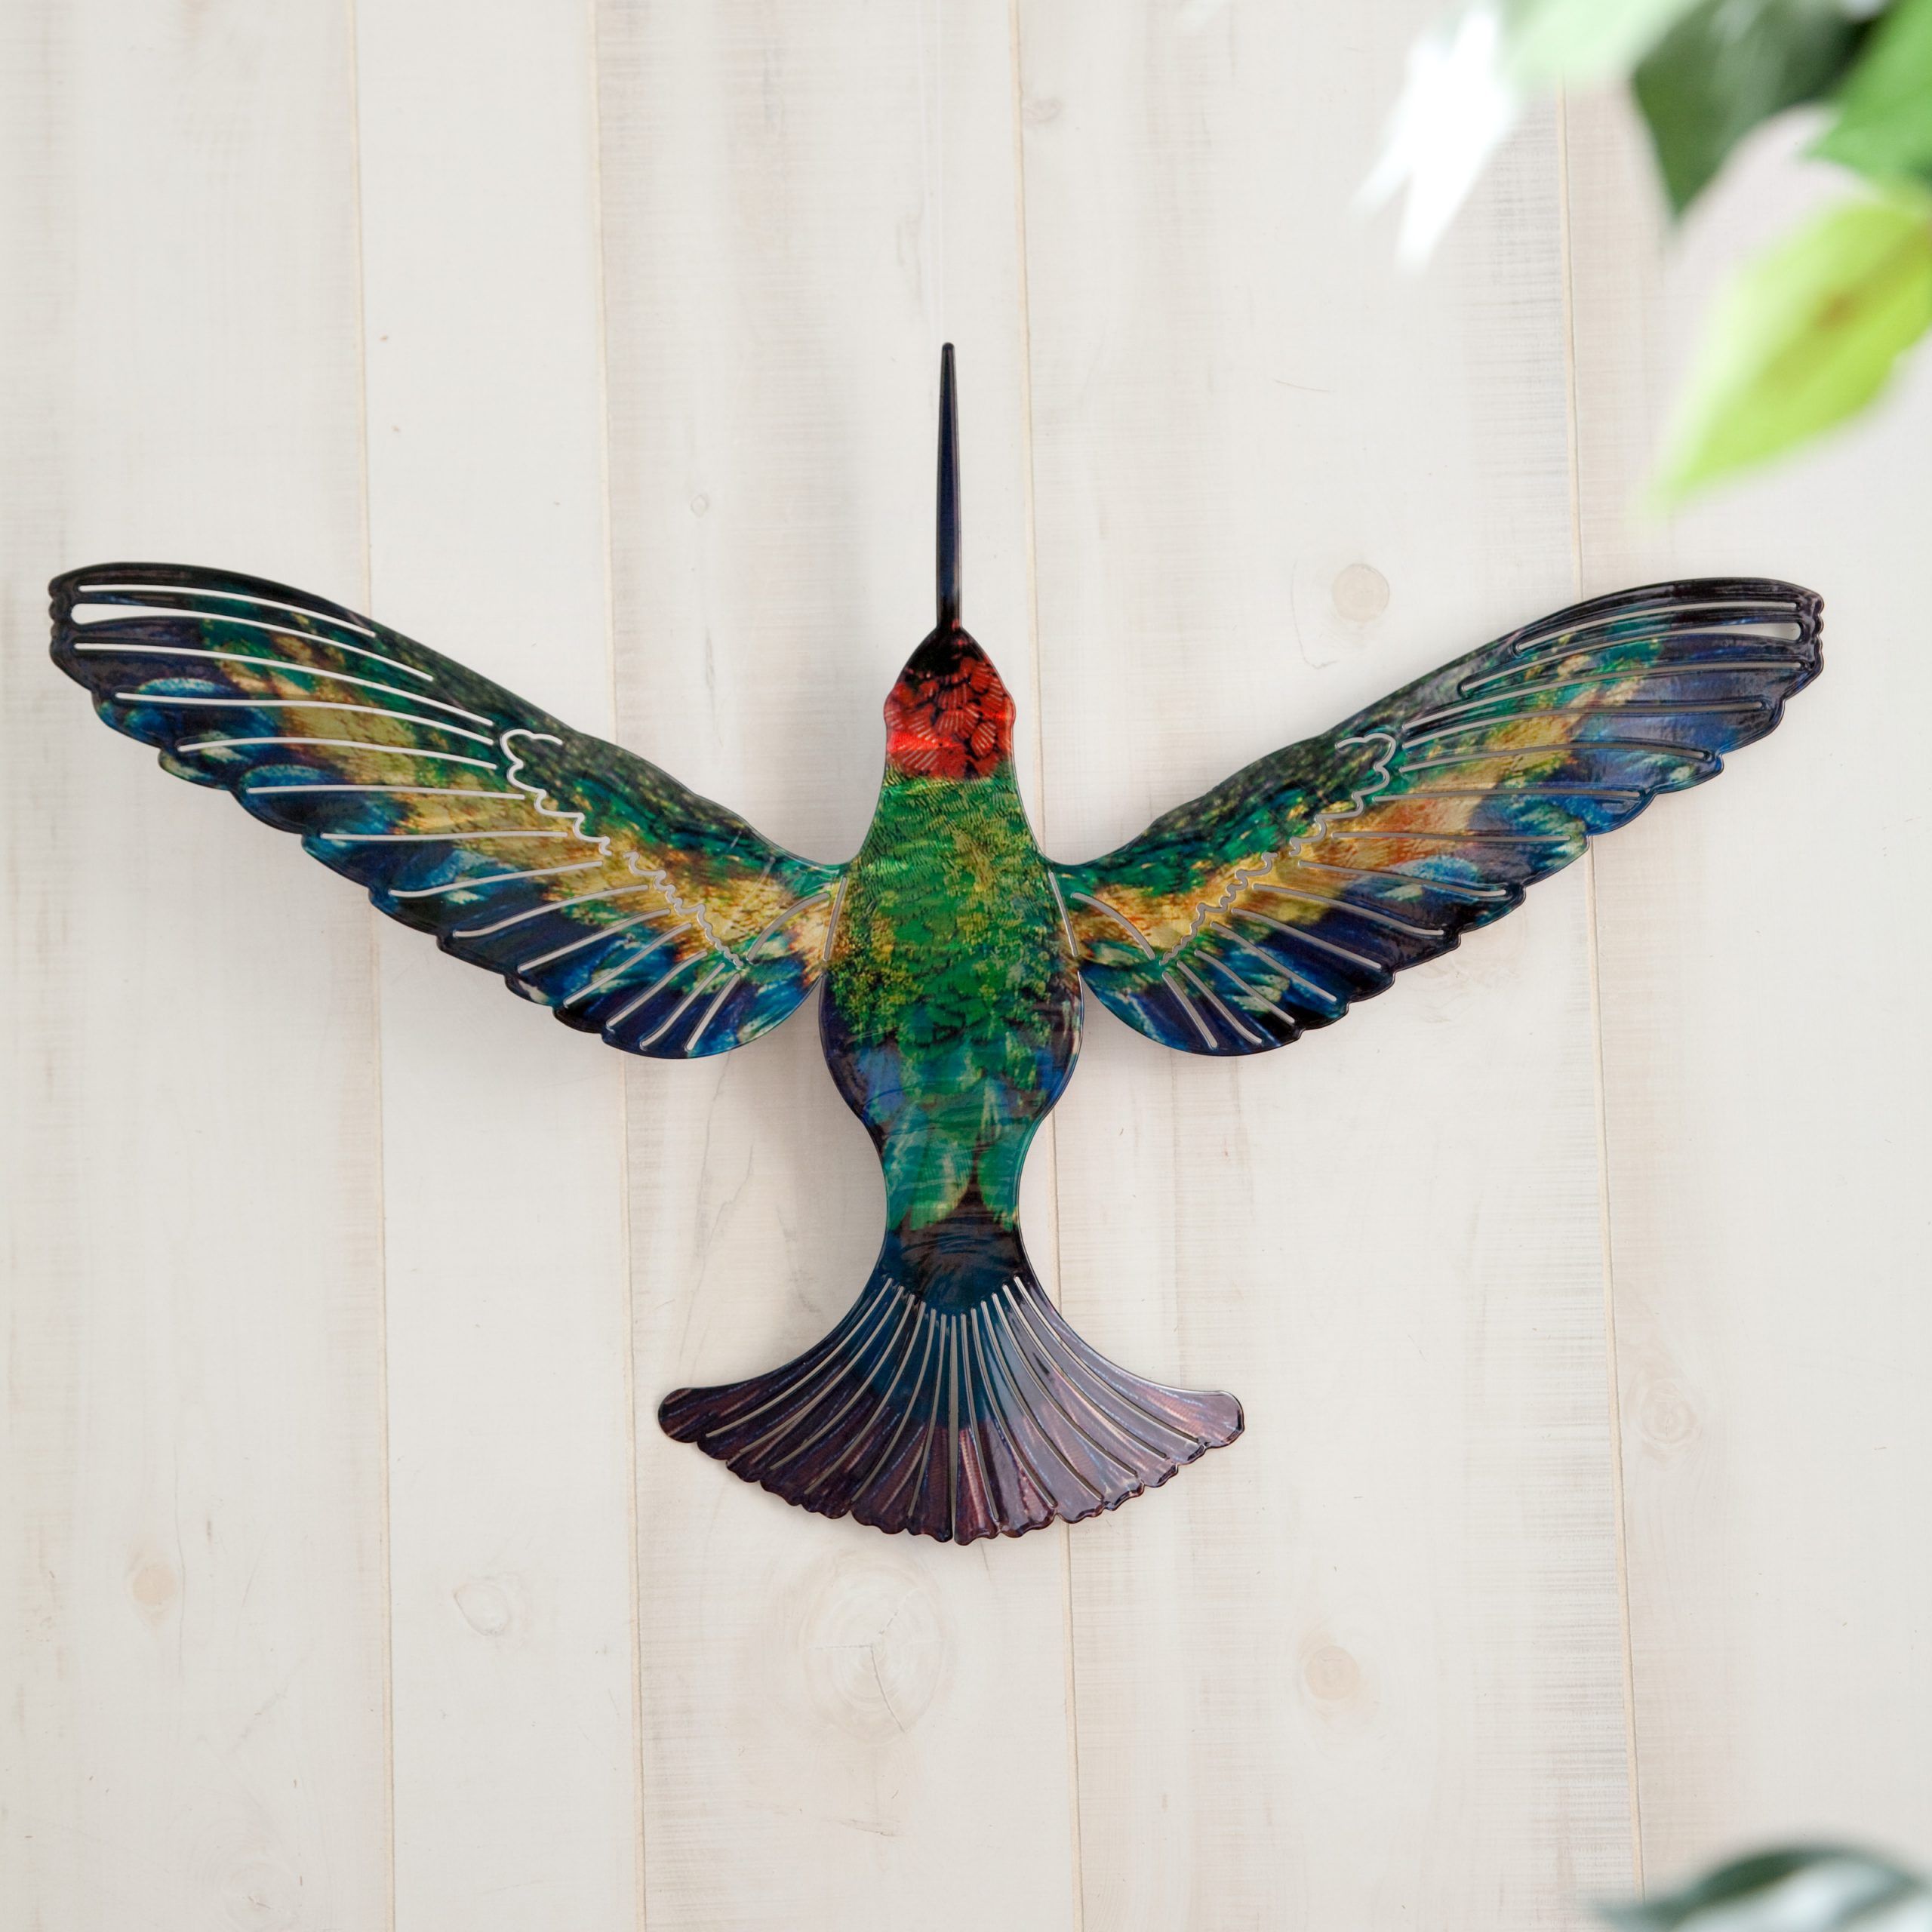 3D Hummingbird Metal Outdoor Wall Art At Hayneedle Intended For Birds Metal Wall Art (View 10 of 15)